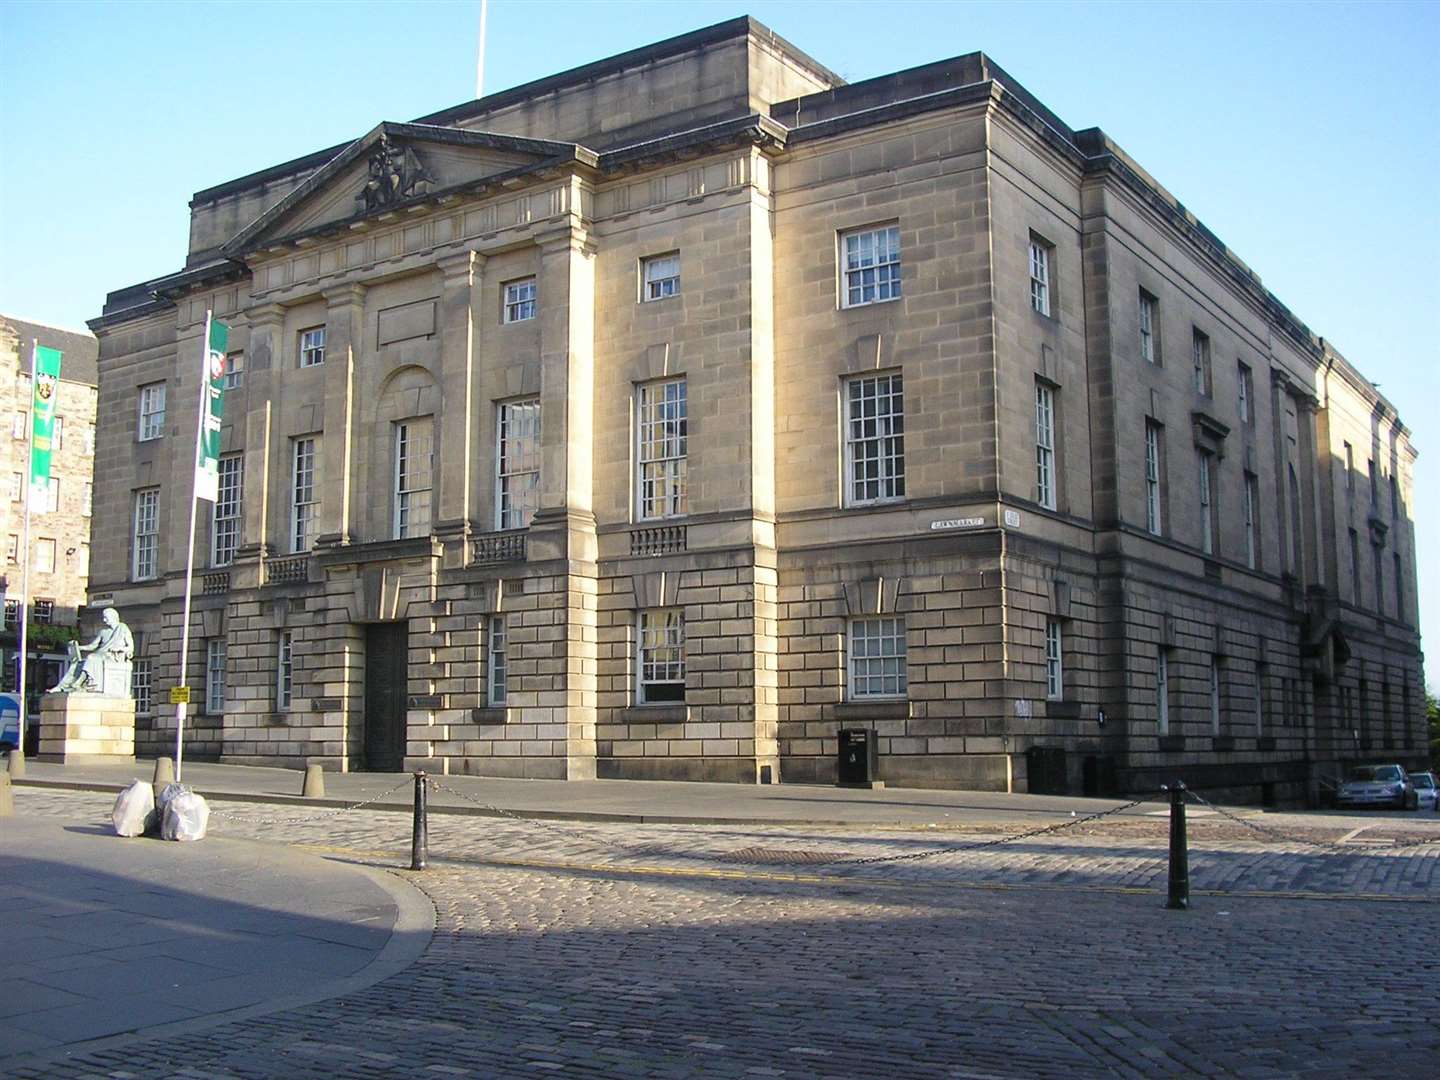 Denis Alexander was sentenced at the High Court in Edinburgh.